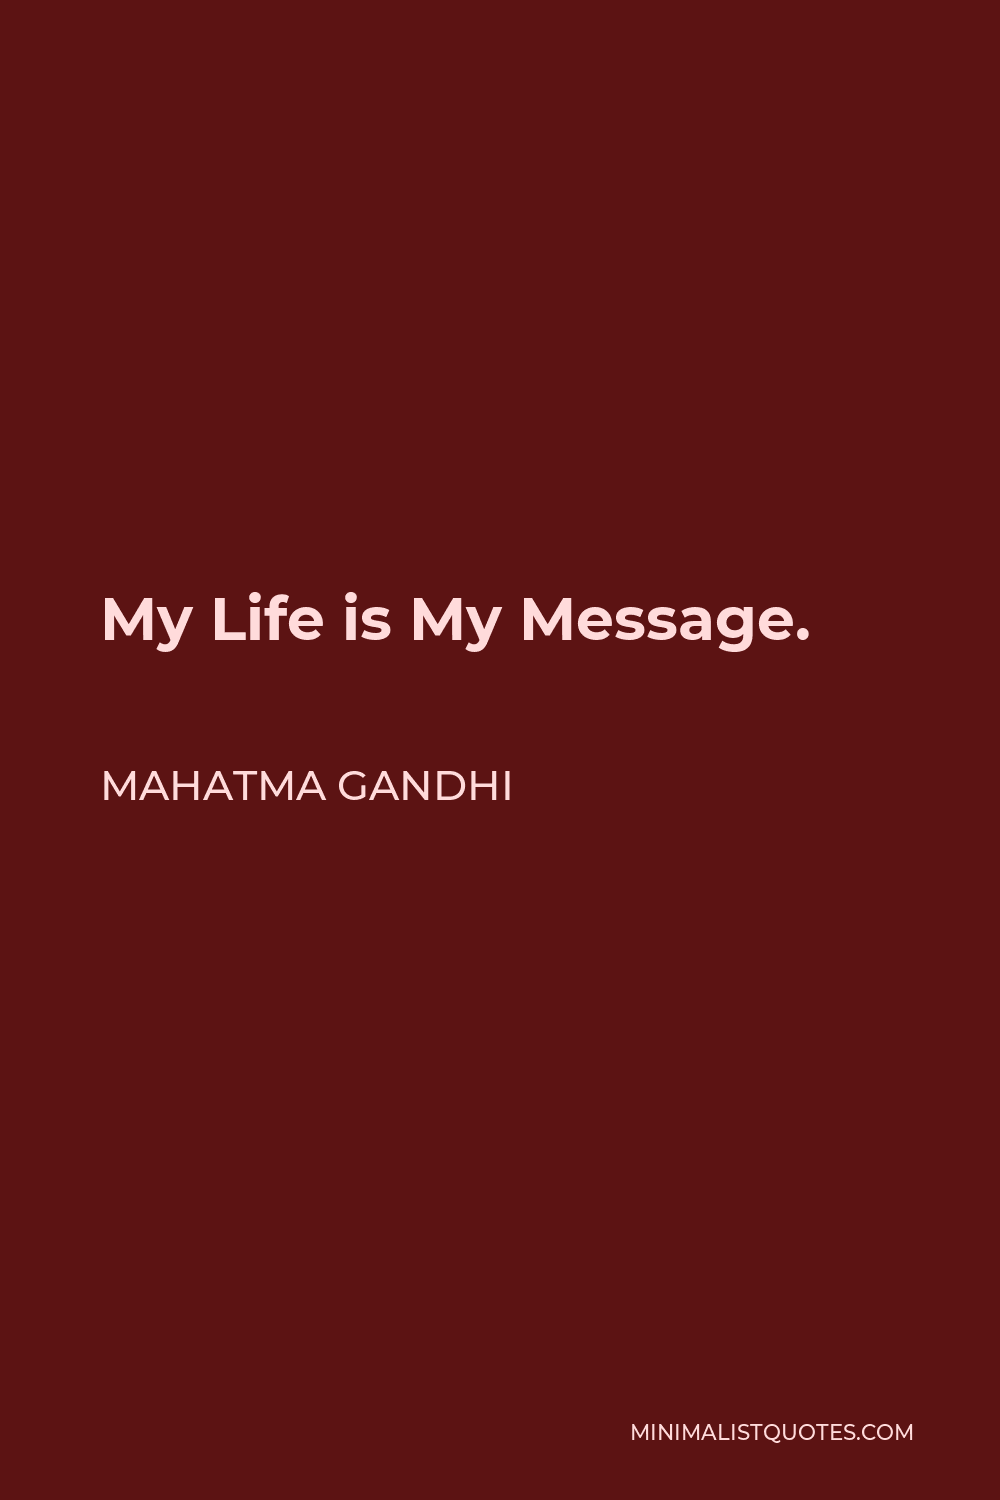 Mahatma Gandhi Quote - My Life is My Message.